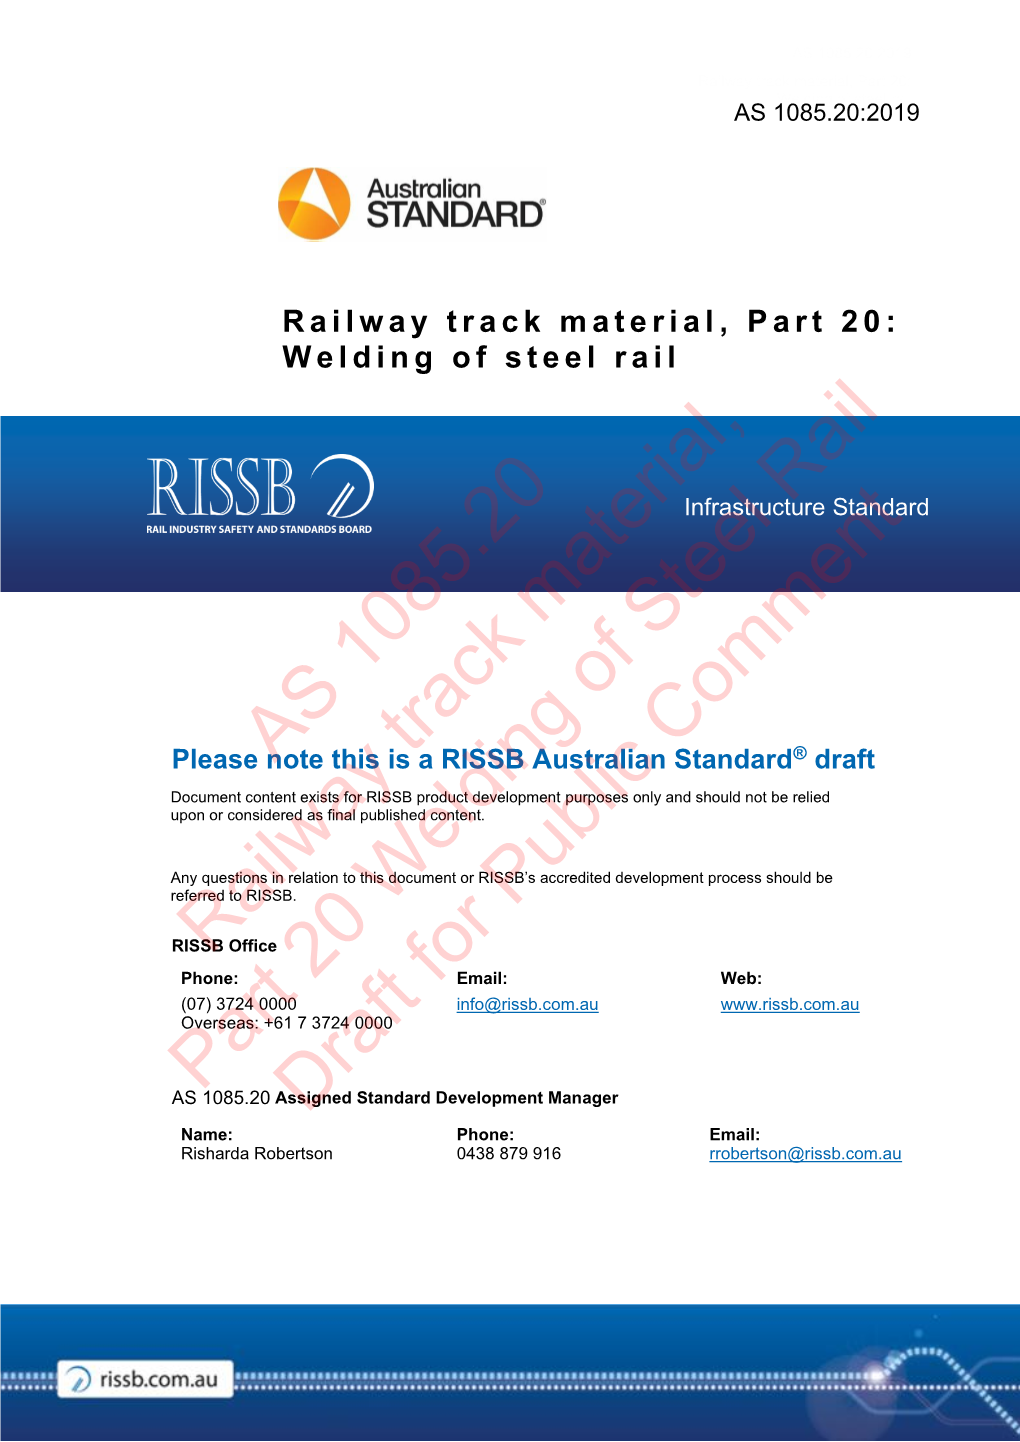 AS 1085.20 Railway Track Material, Part 20 Welding of Steel Rail Draft